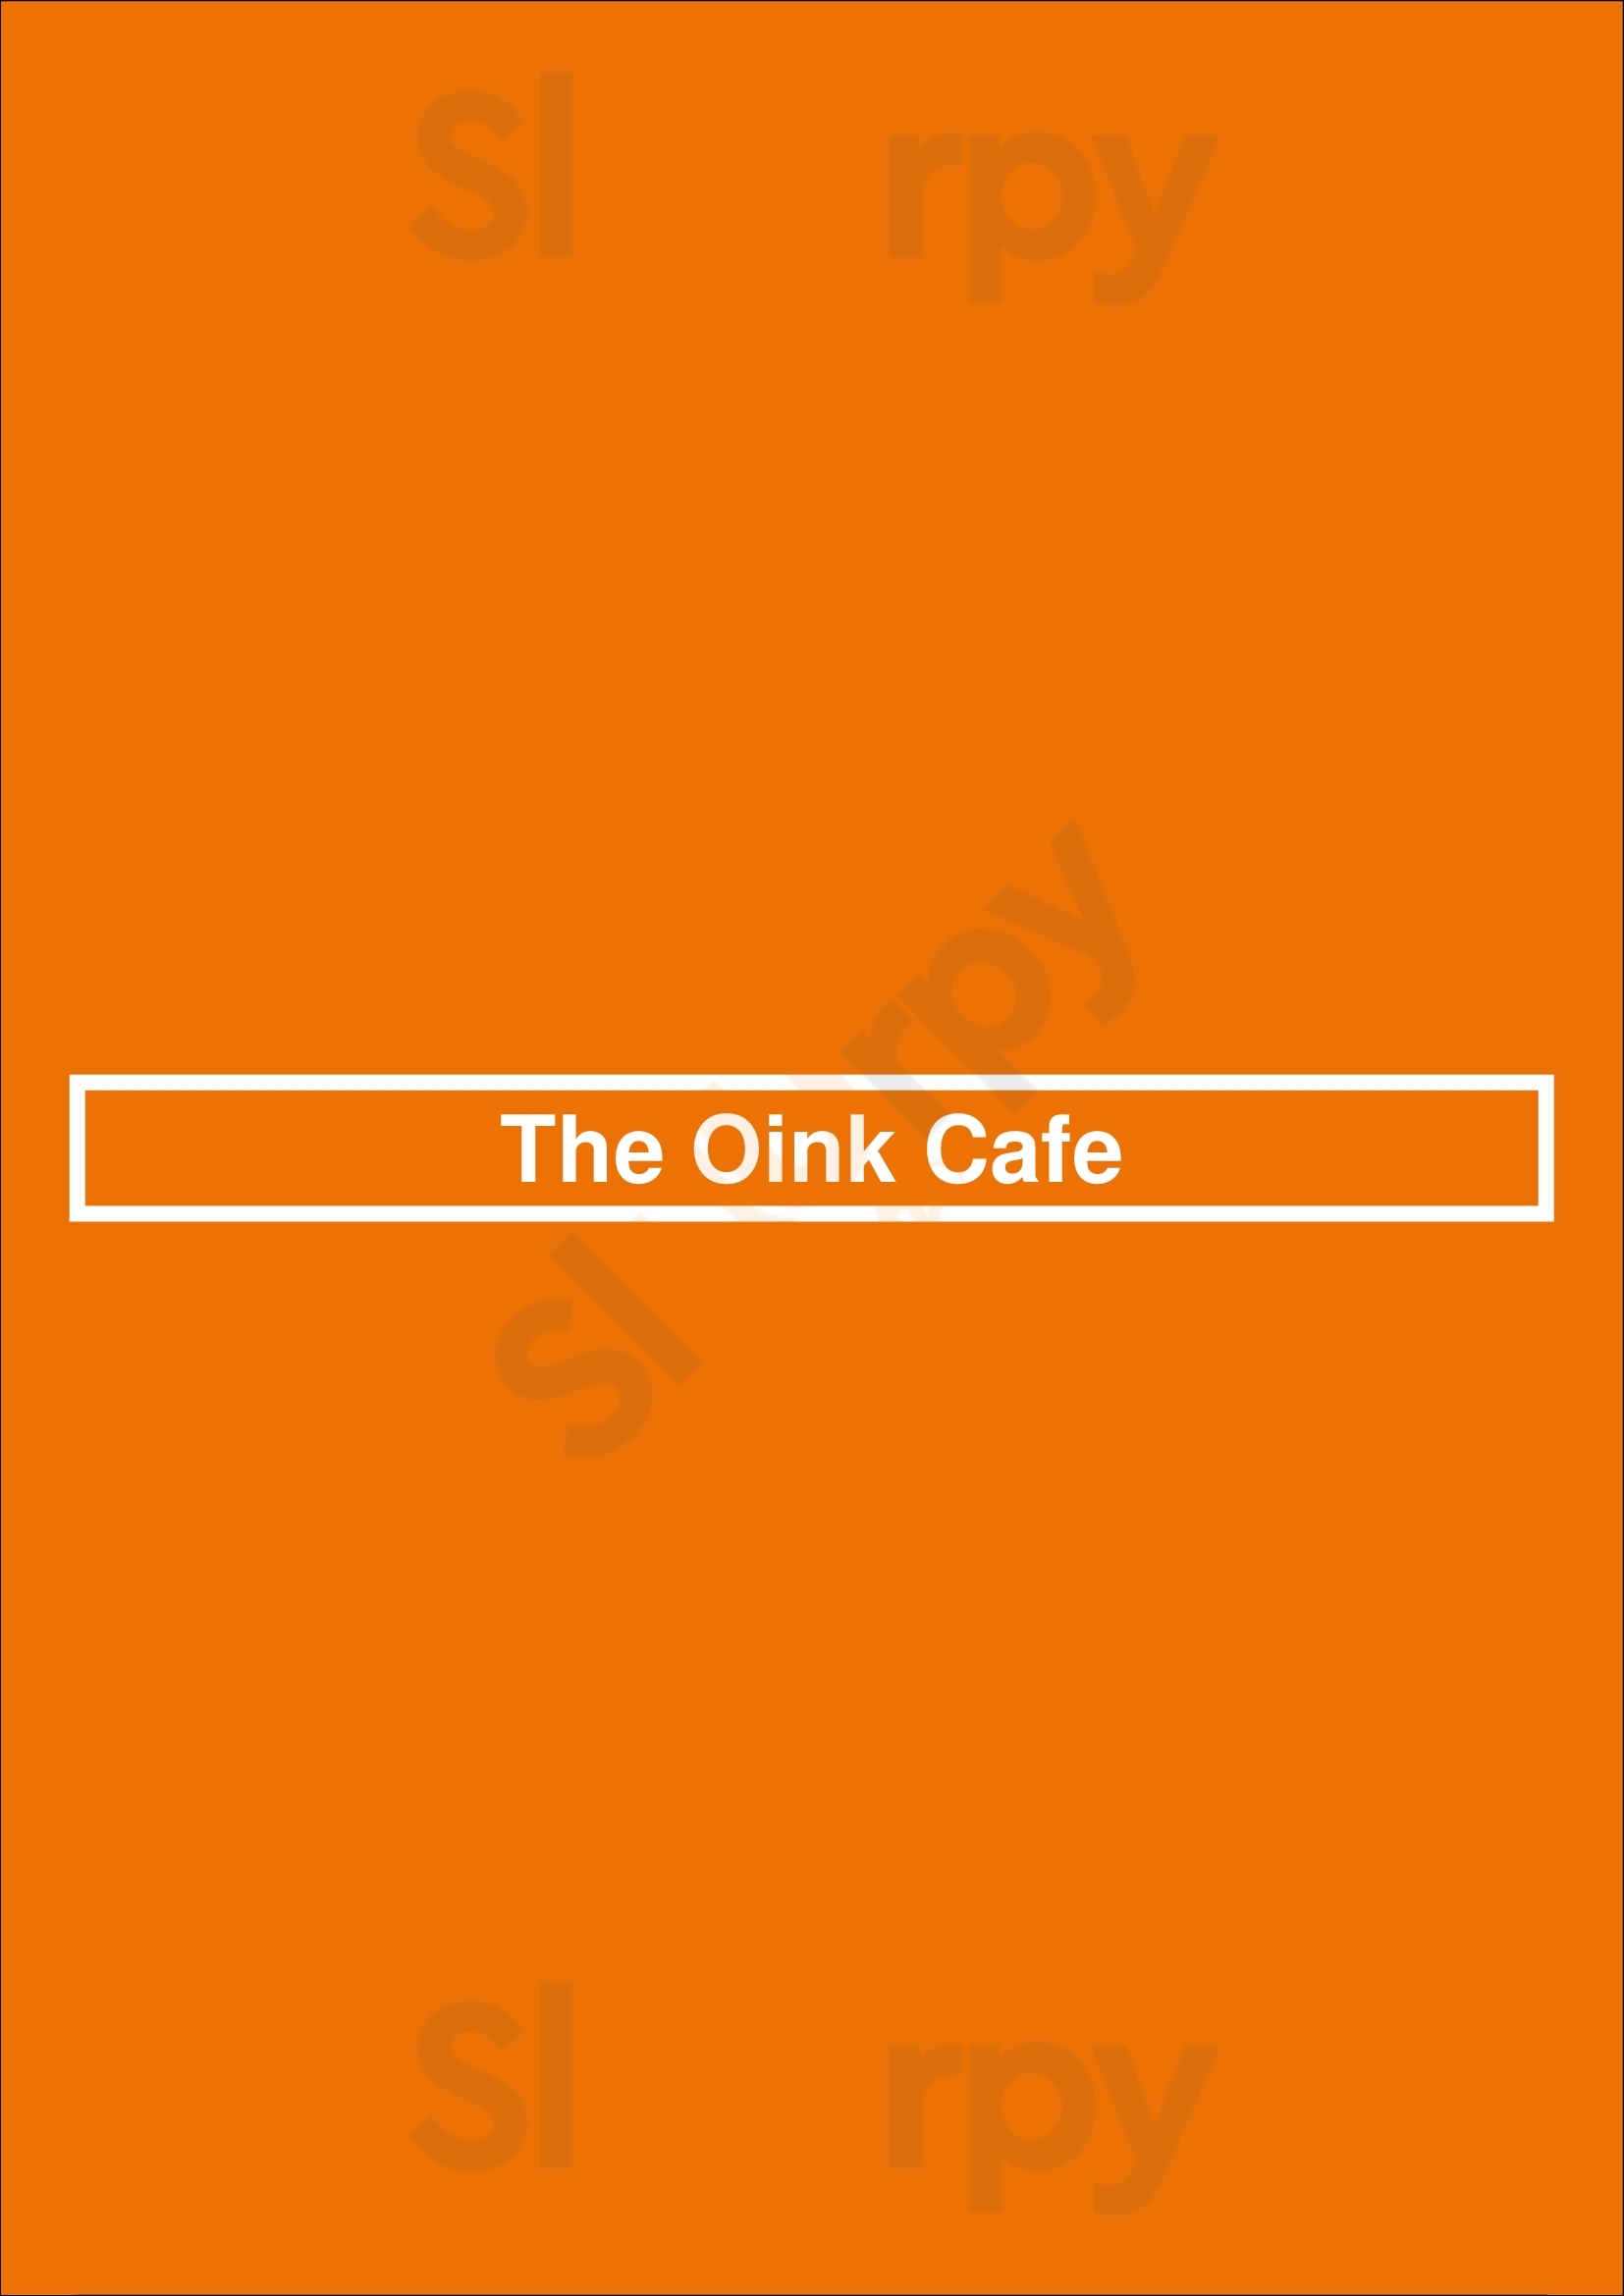 The Oink Cafe Tucson Menu - 1